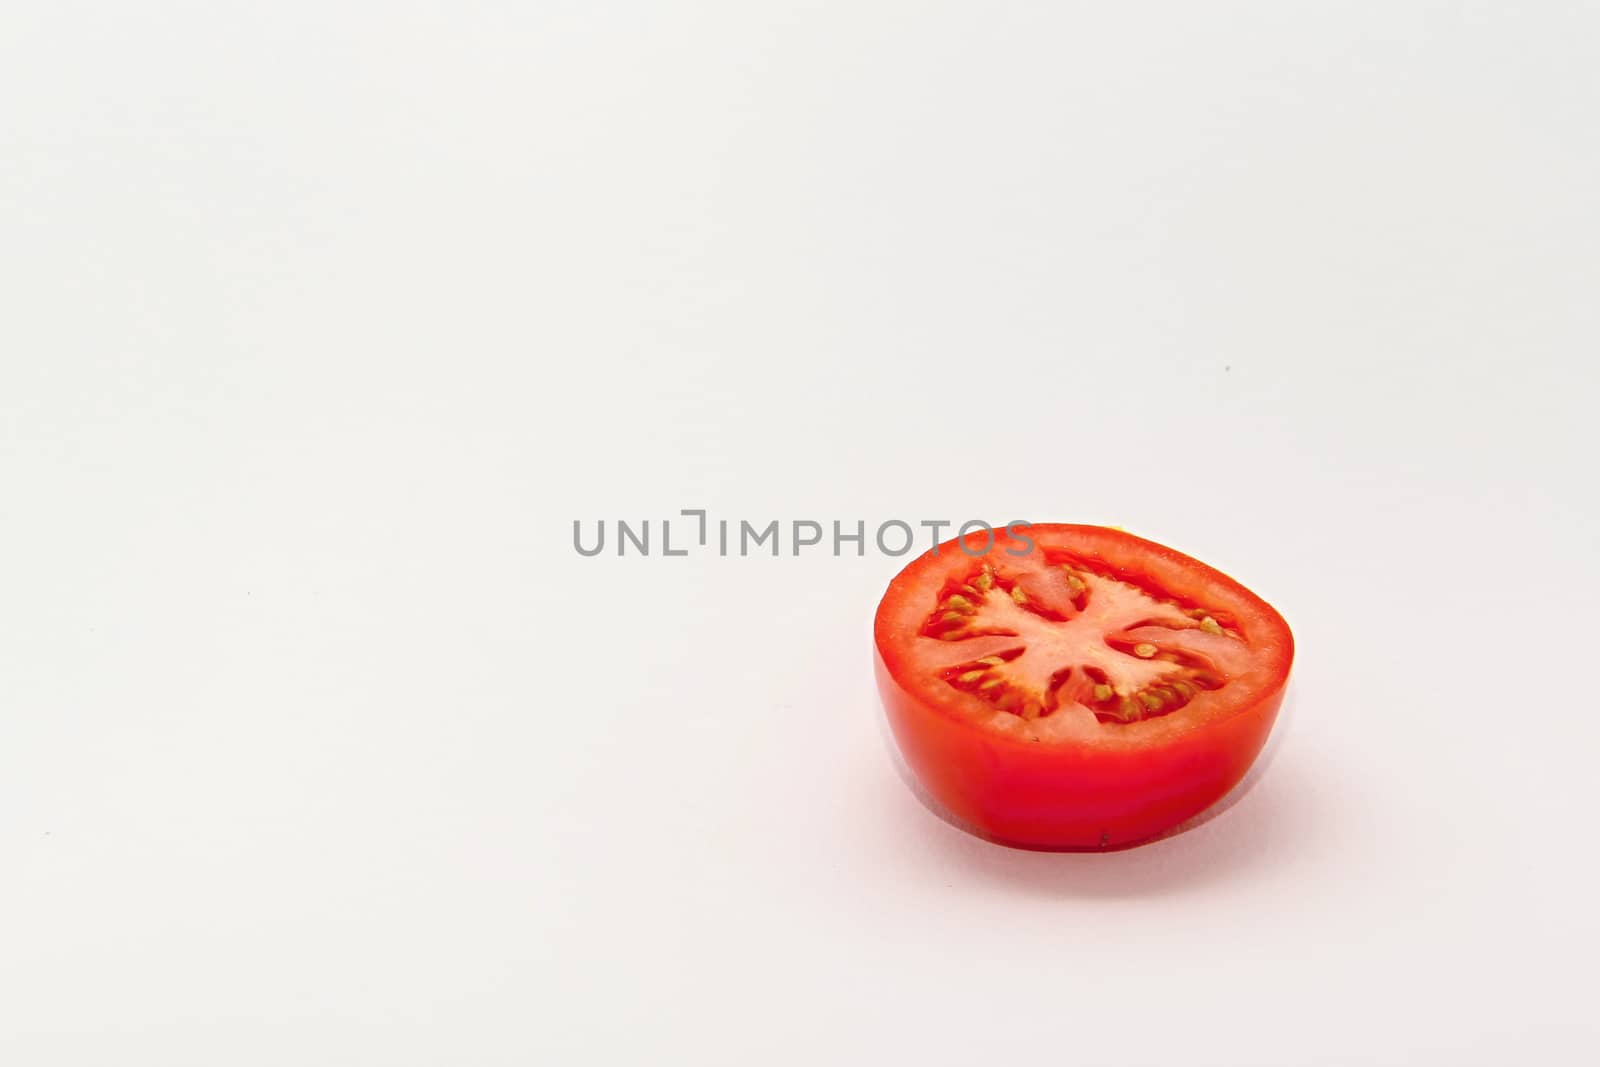 Tomate Object by Dermot68